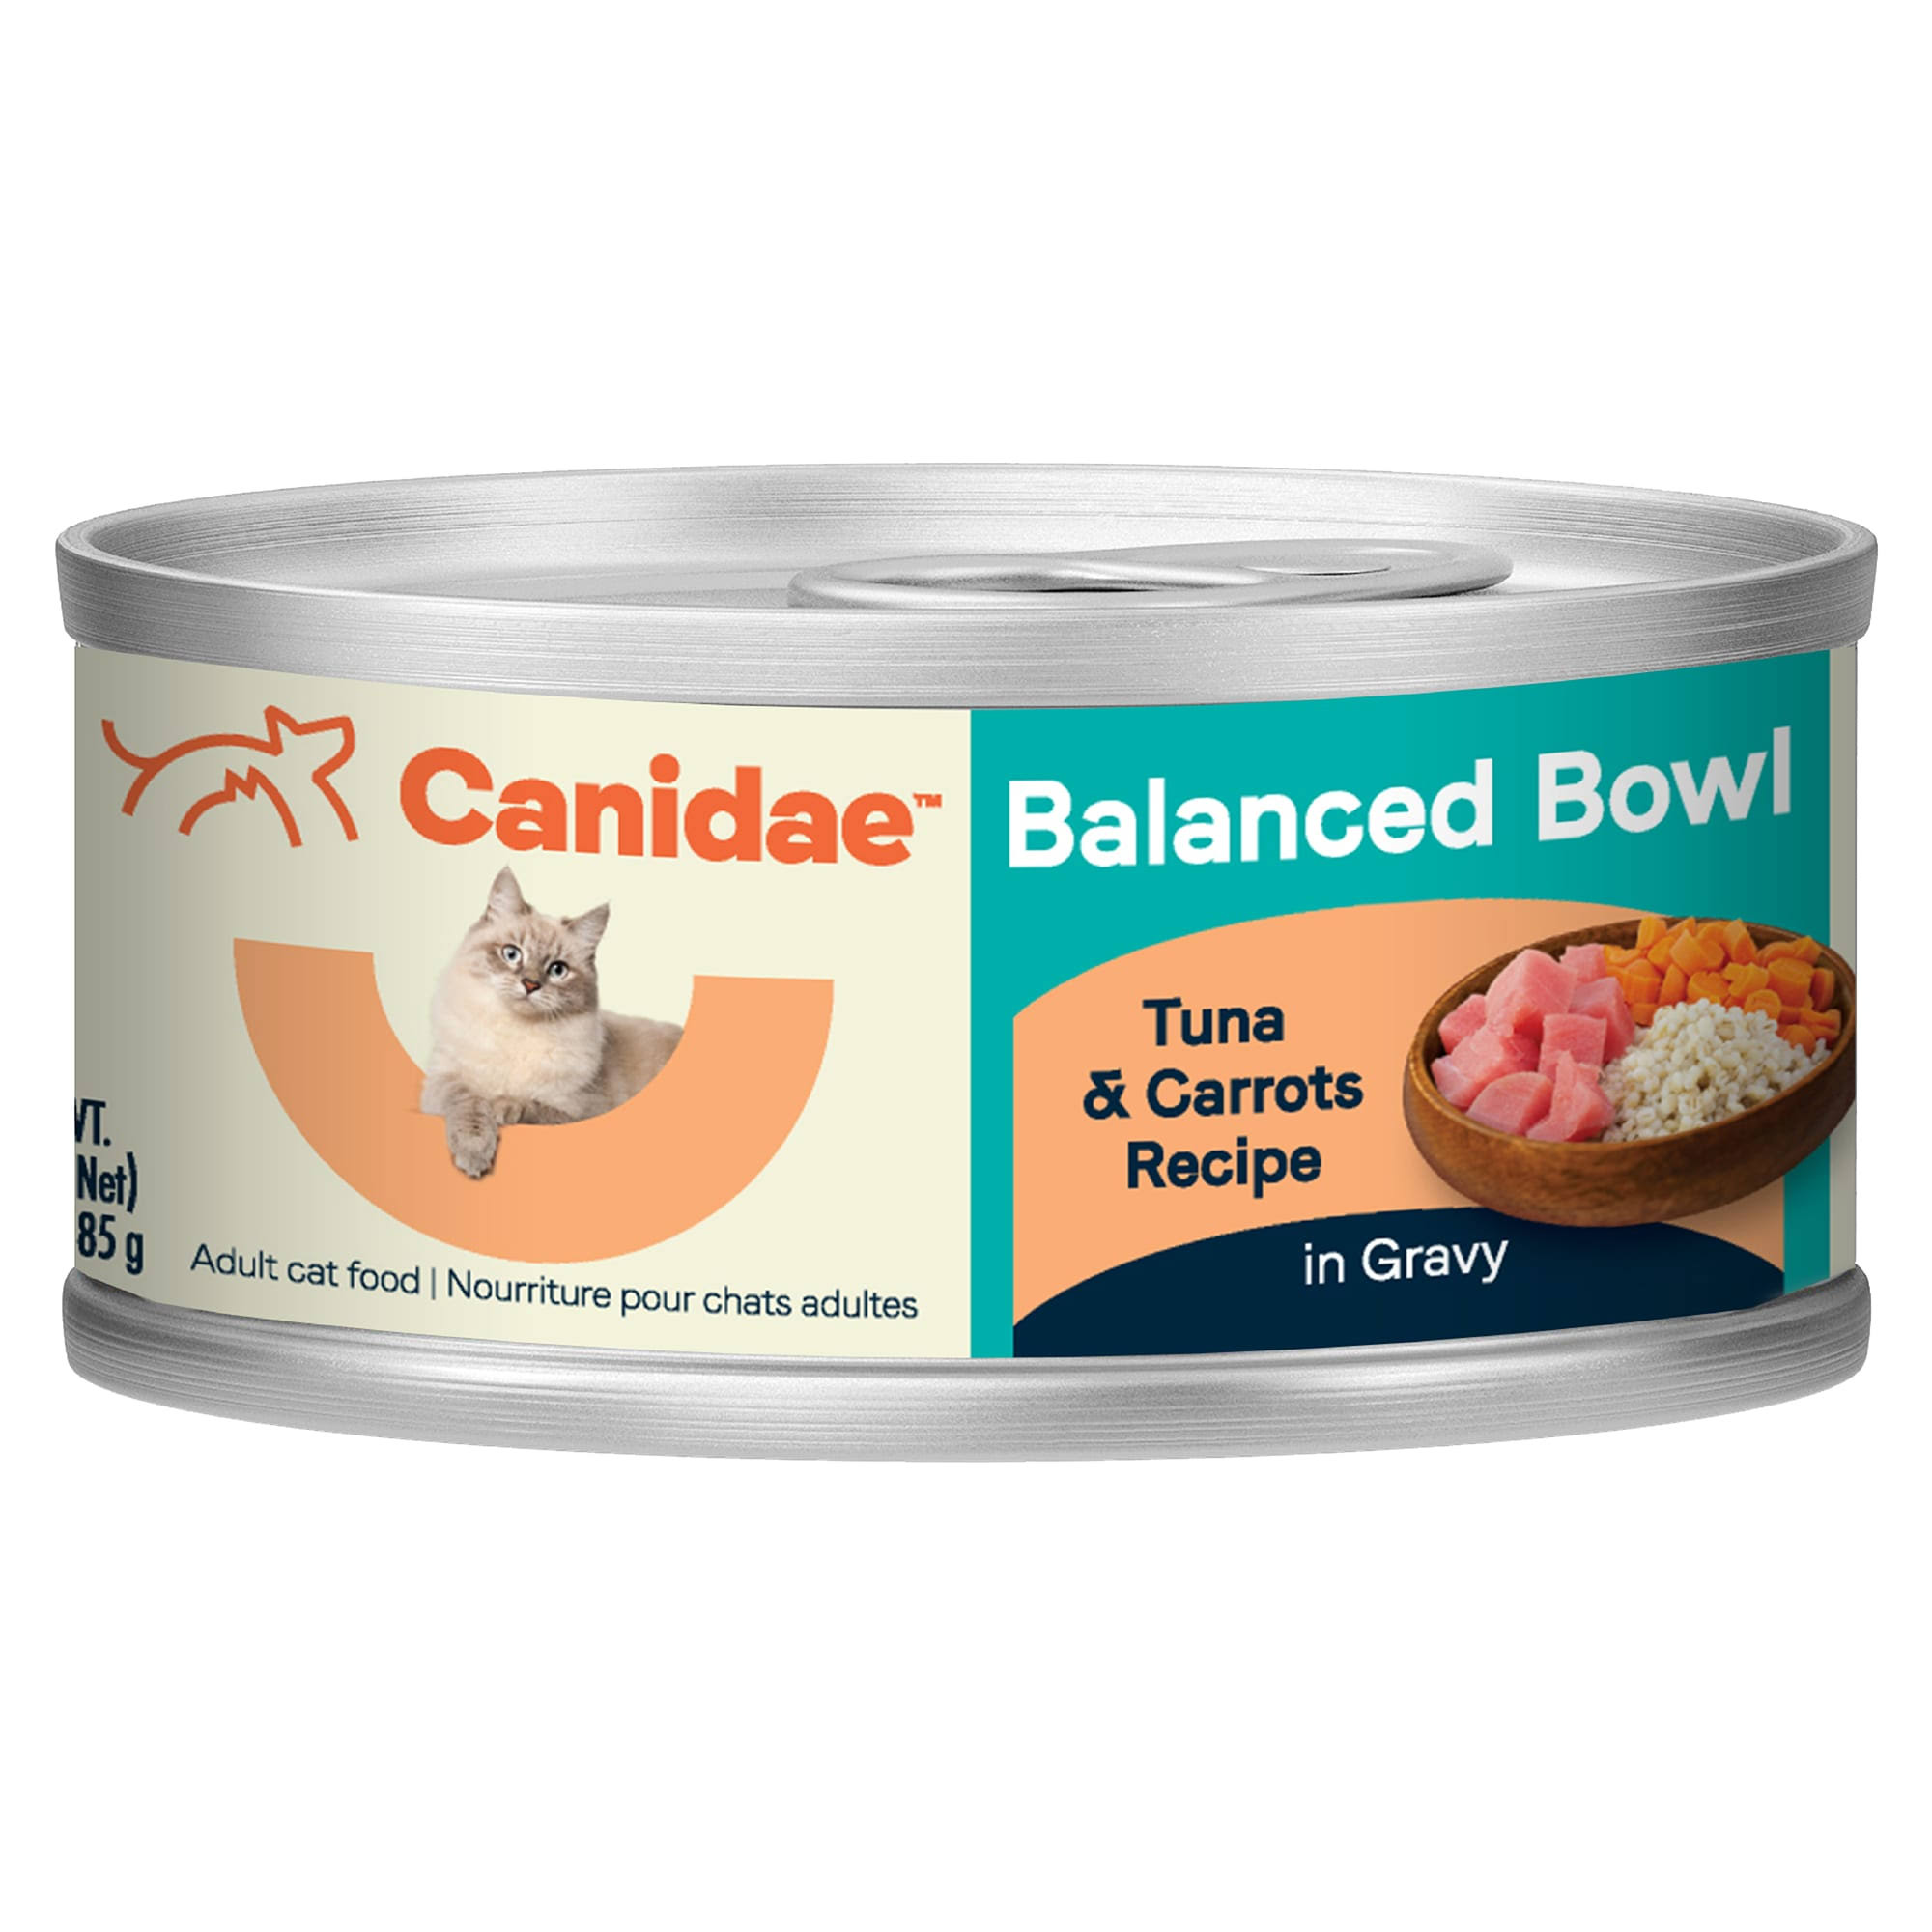 Canidae Balanced Bowl Tuna & Carrots Recipe Wet Cat Food, 3 oz